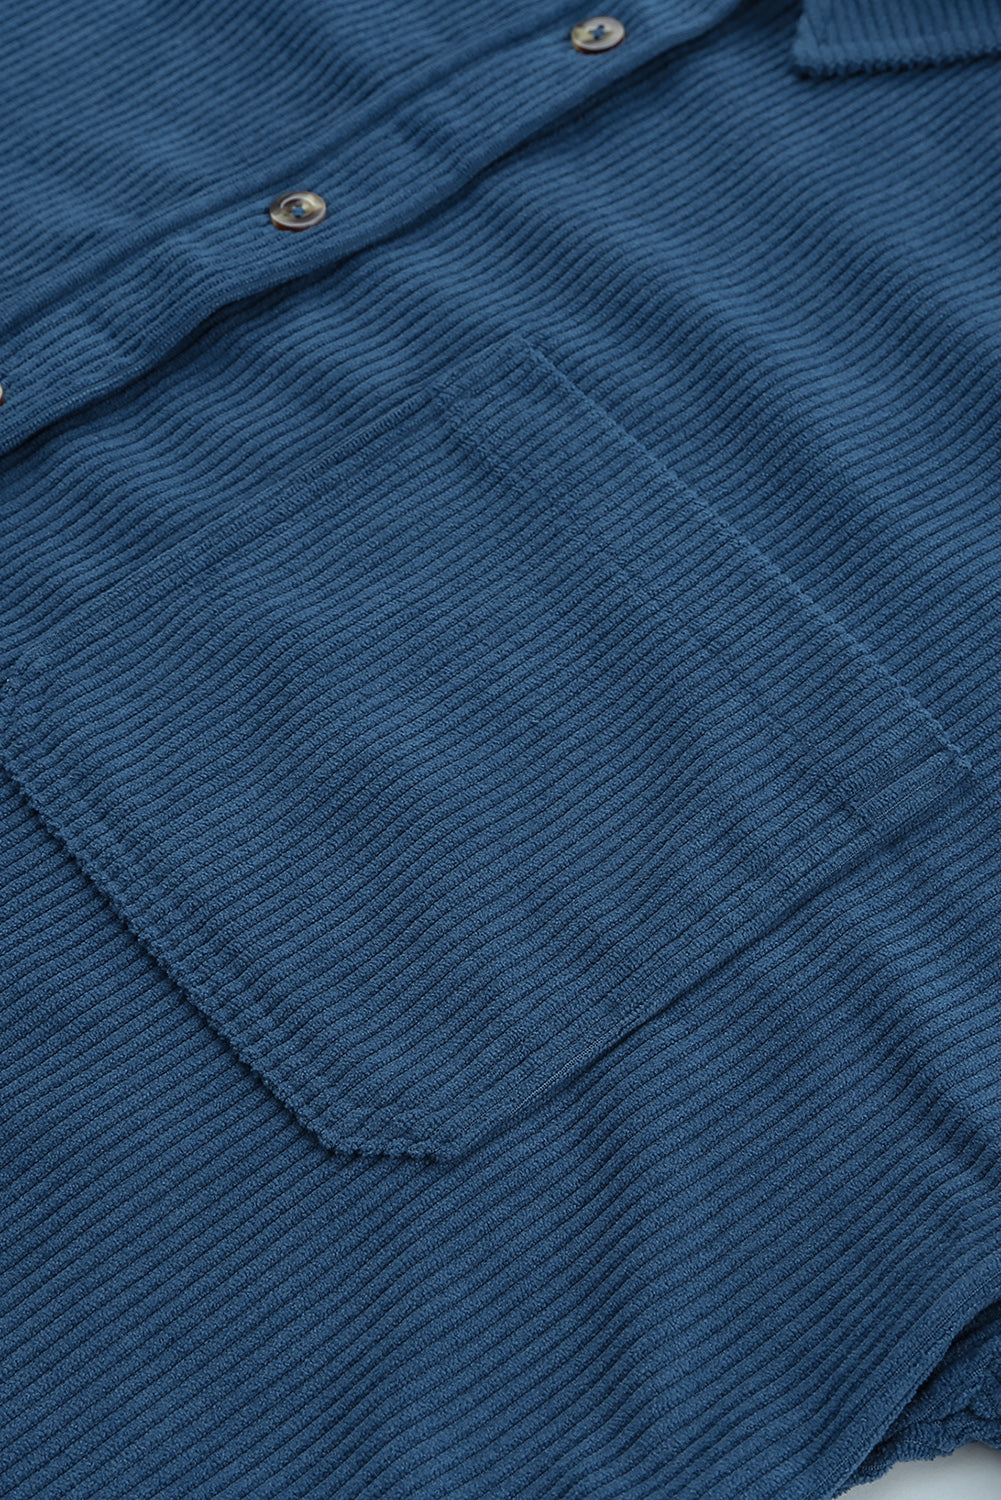 Blue Corduroy Button Pocket Shirt